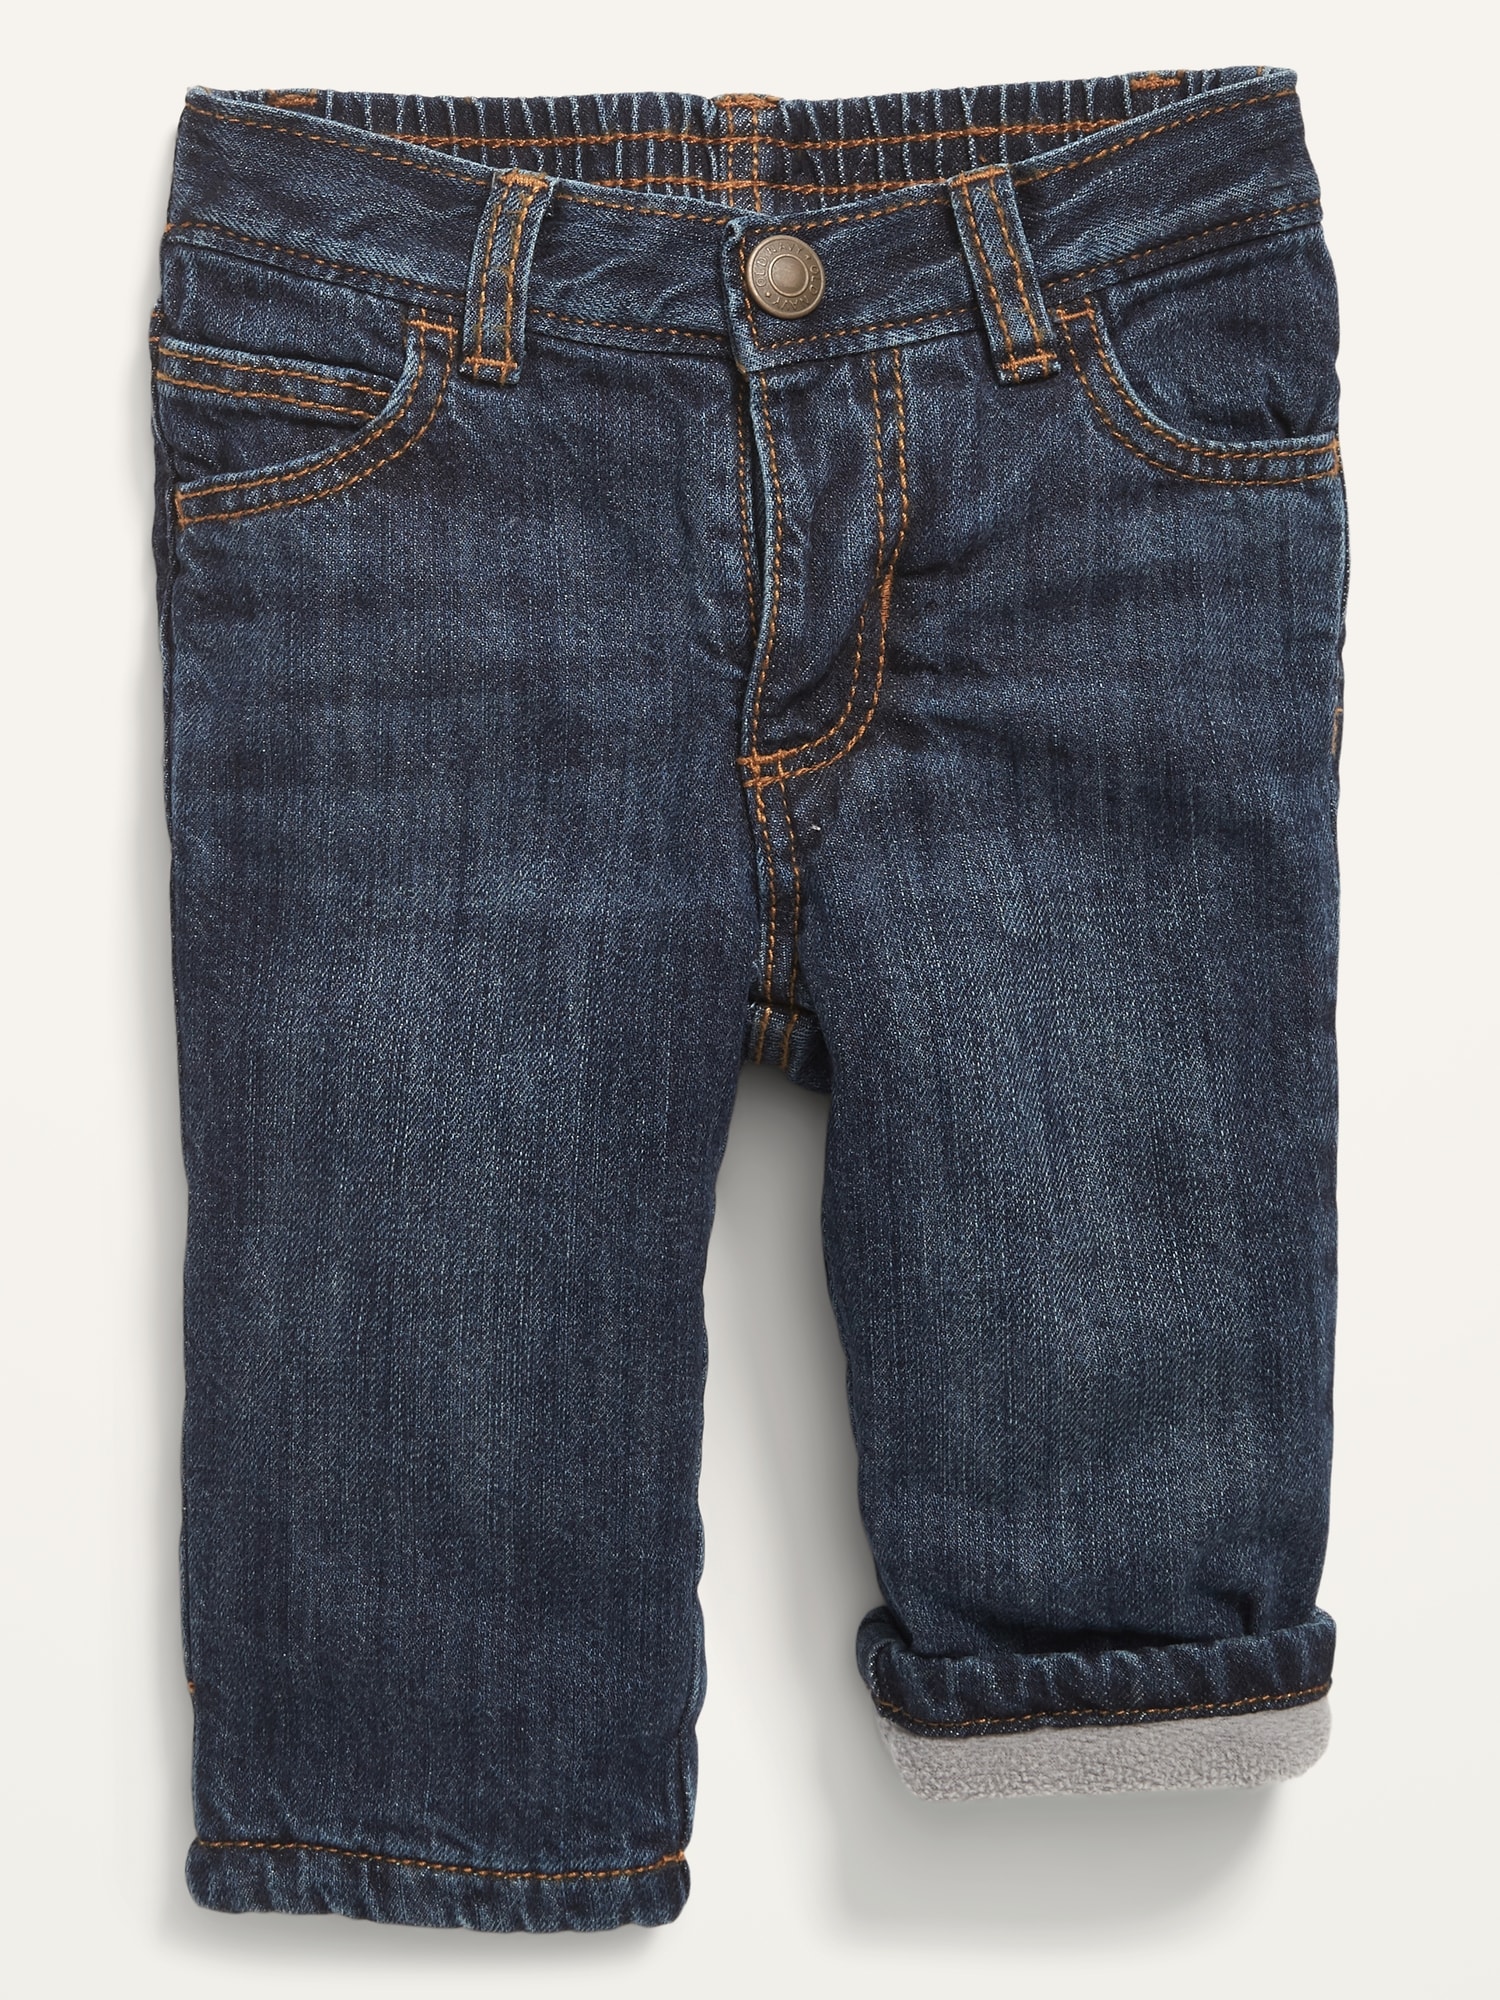 calvin klein skinny jeans costco